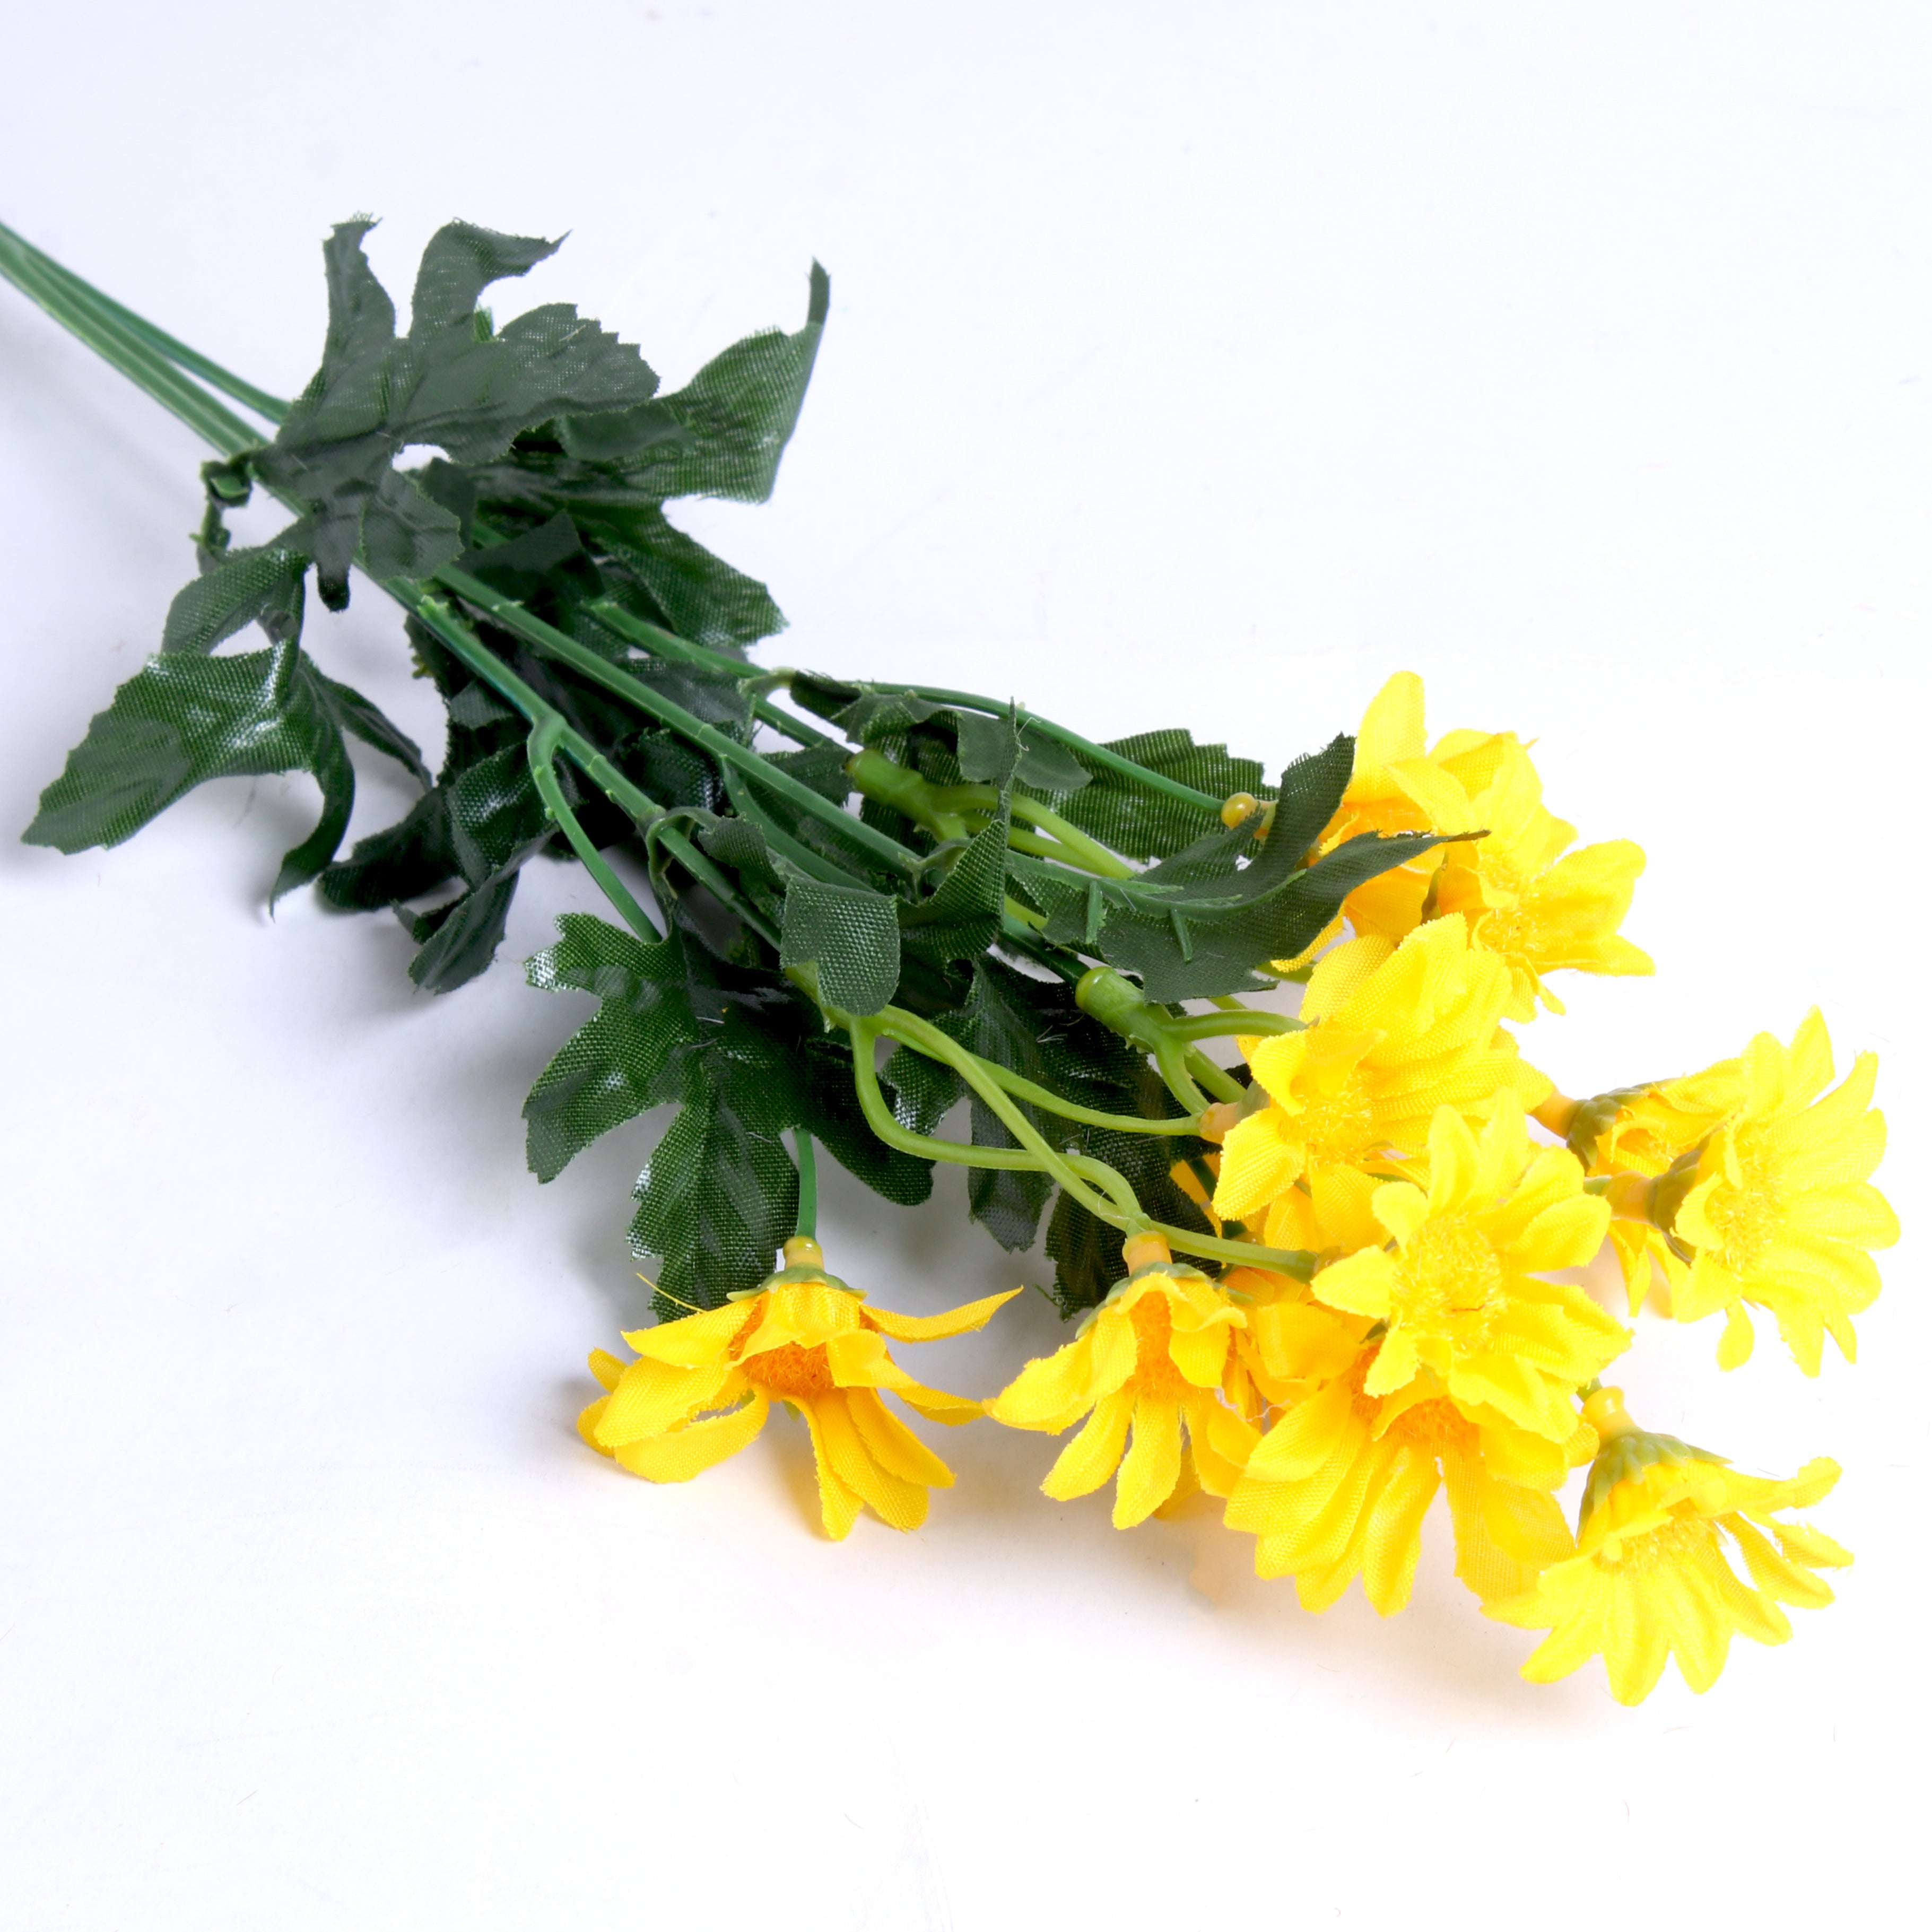 Artificial Flower Dasiy Sunny Yellow 13.5Inch